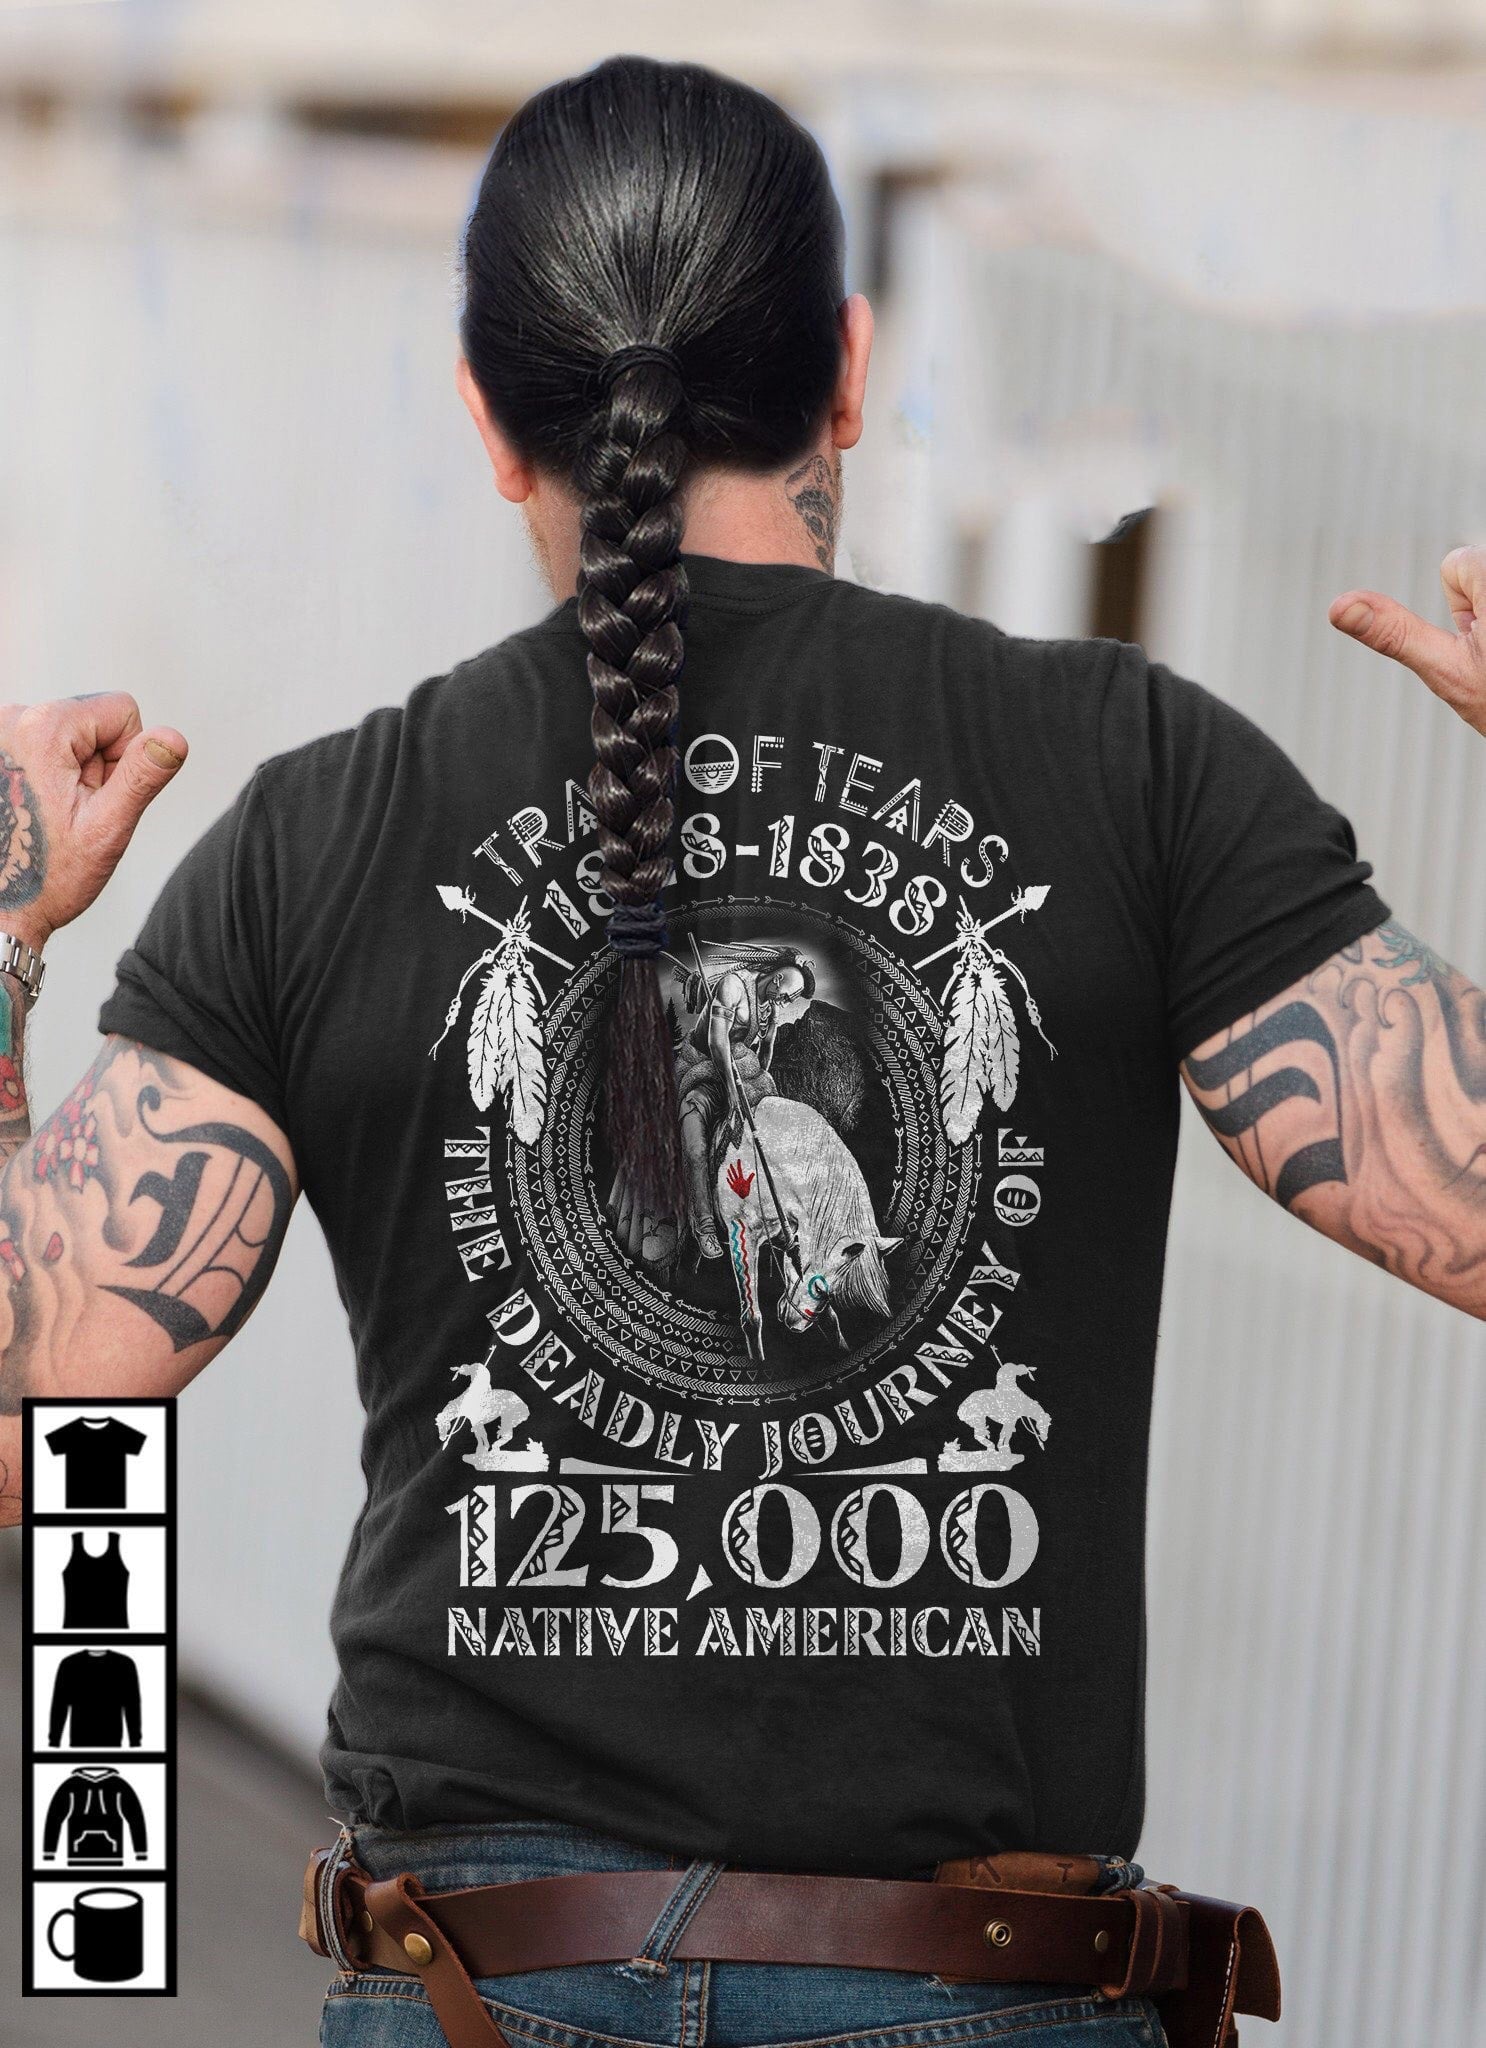 Trade of tears 1818 - 1838 125000 Native American